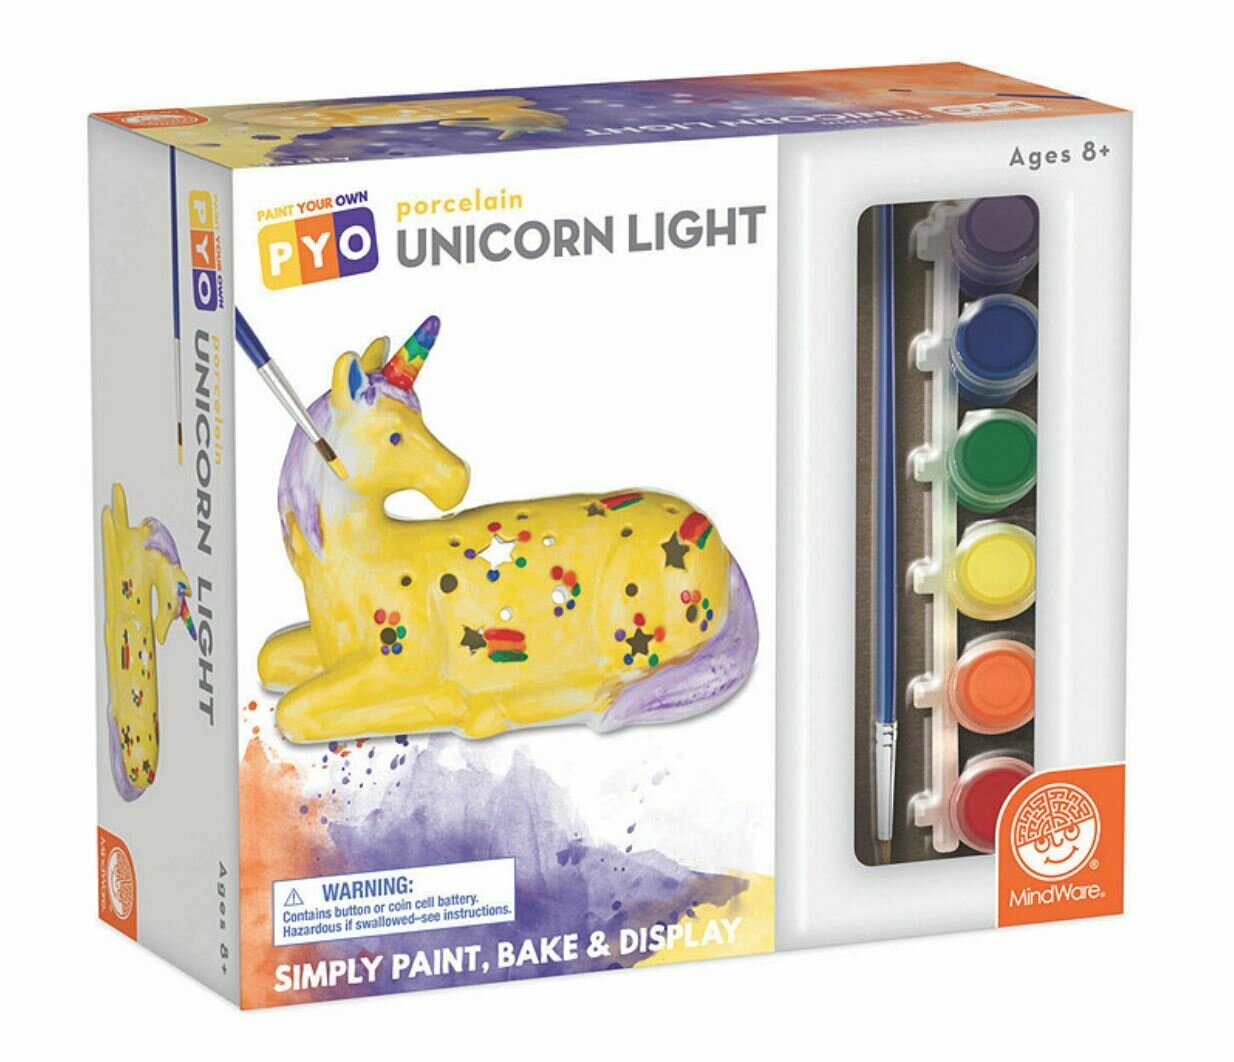 Paint Your Own Unicorn Light